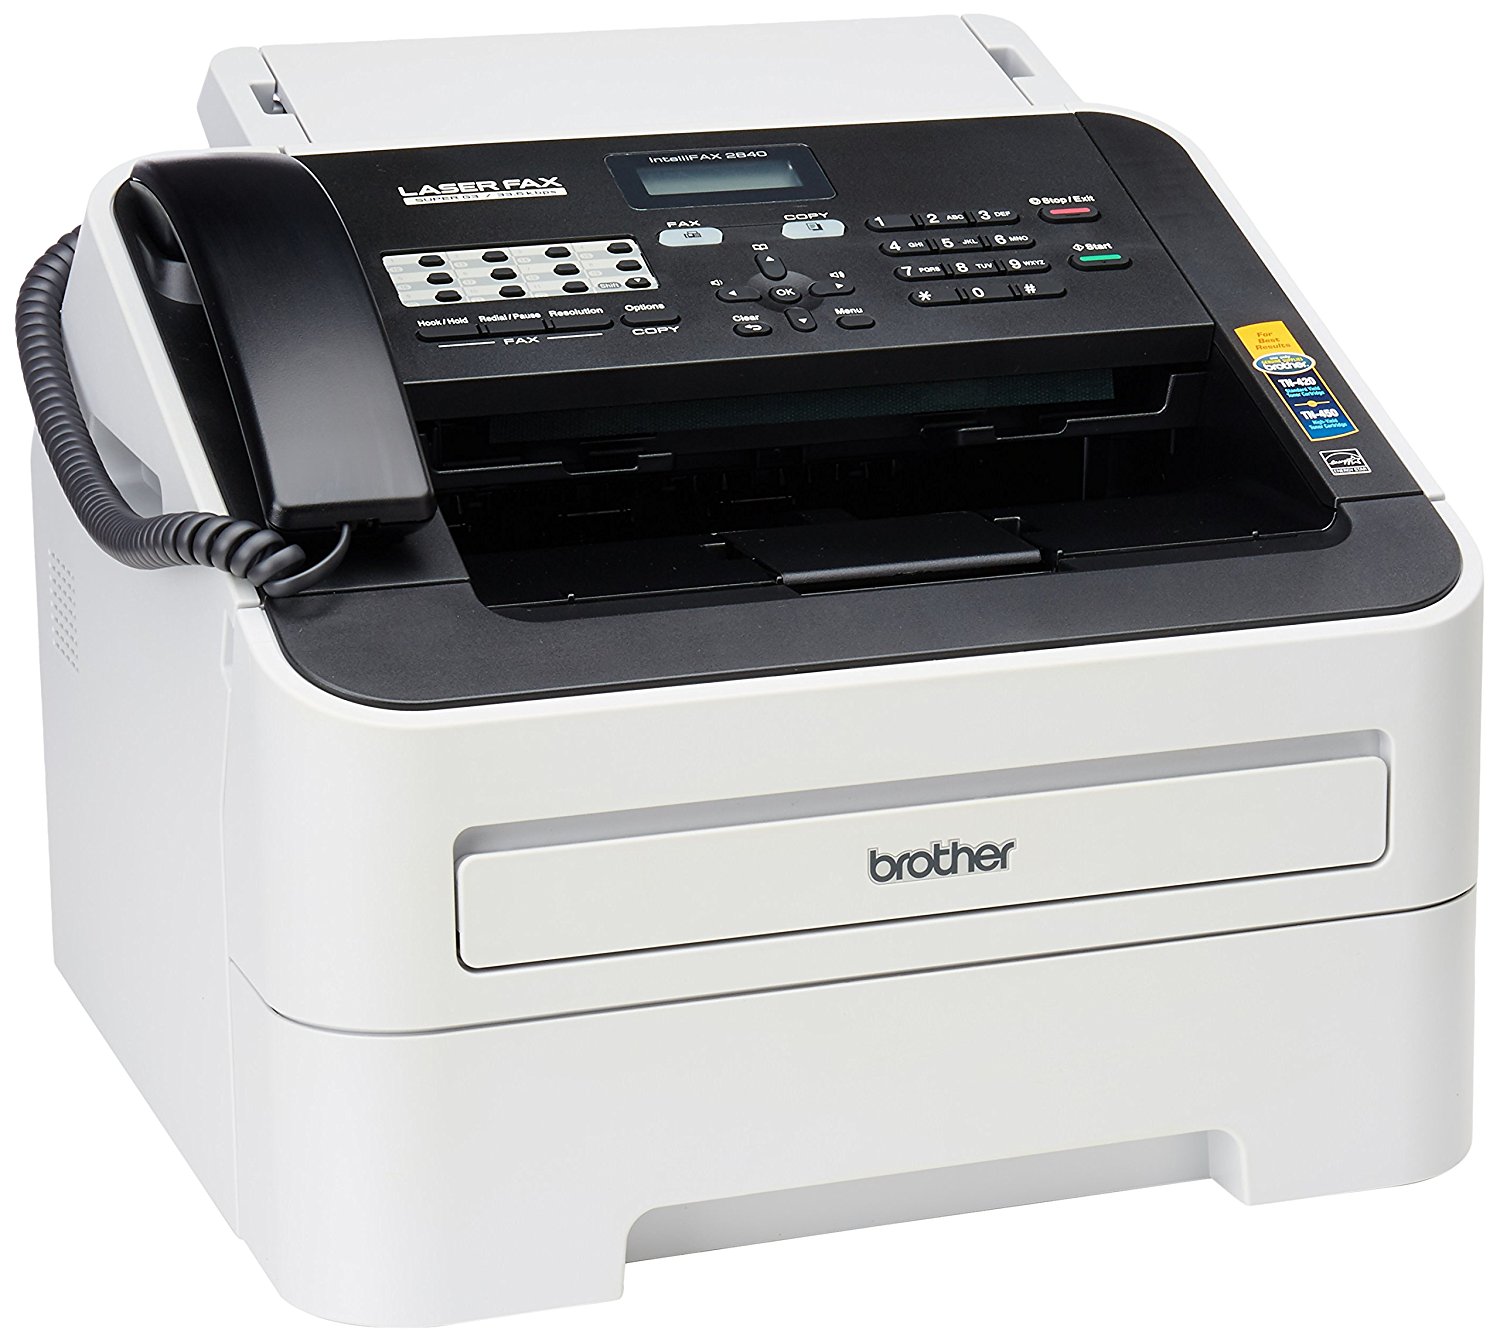 Brother Printer Máquina de fax láser monocromo de alta velocidad Brother FAX-2840